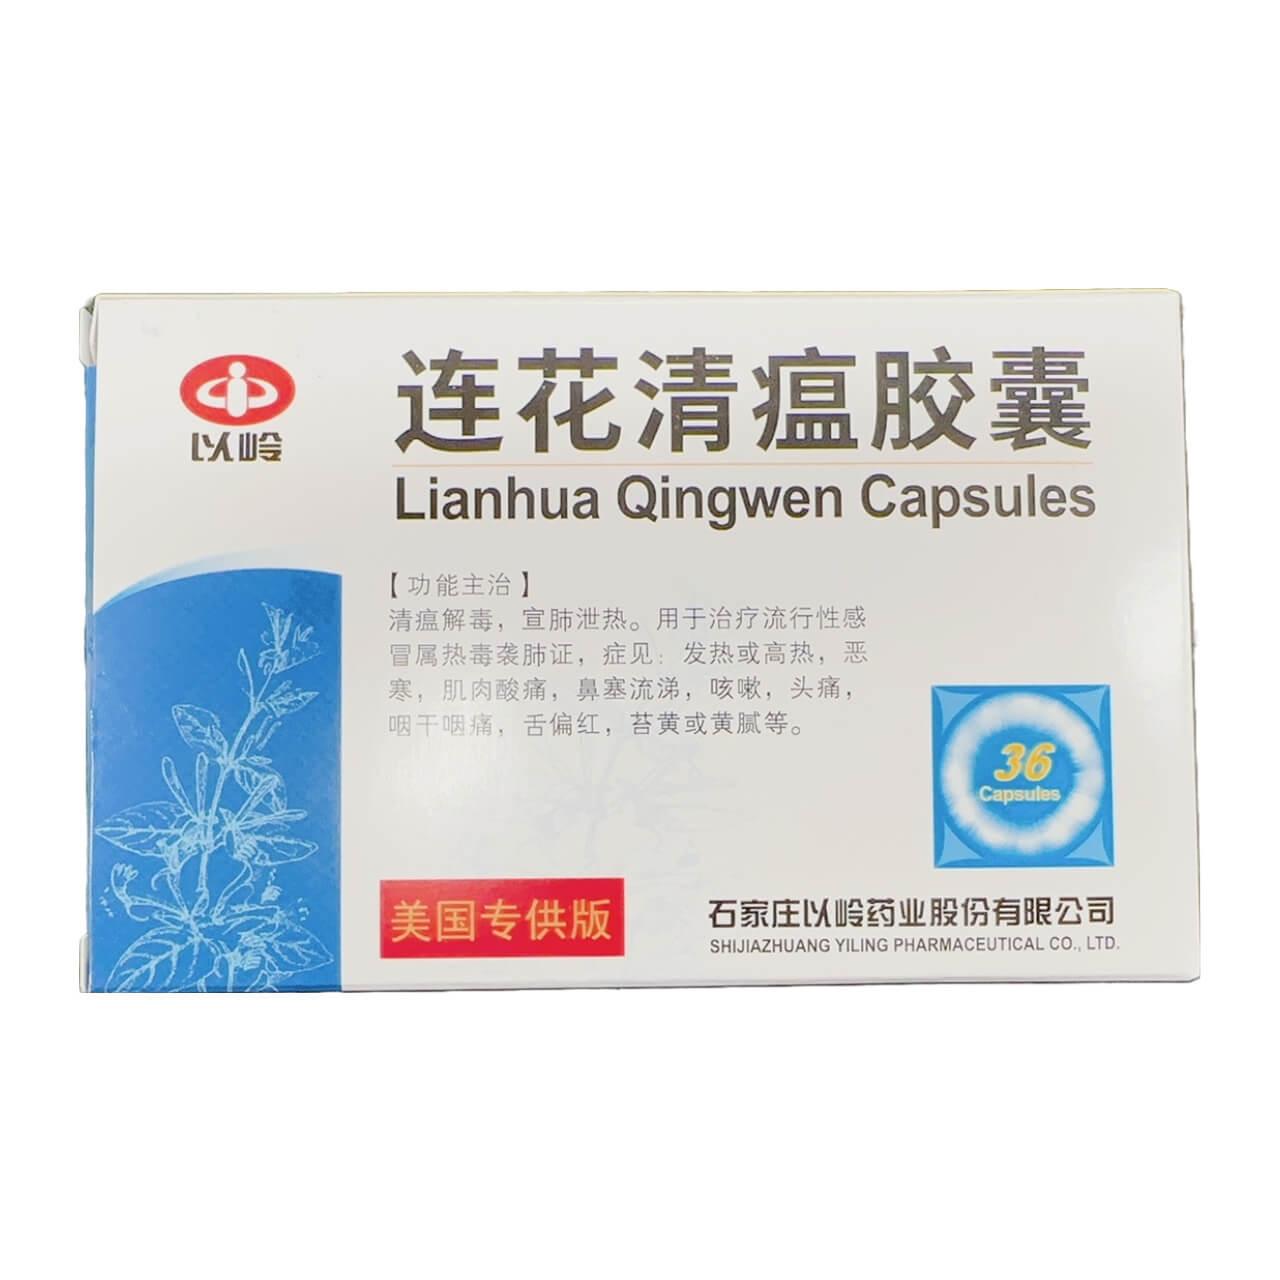 Yiling Lianhua Qingwen Plus (36 Capsules) - Buy at New Green Nutrition